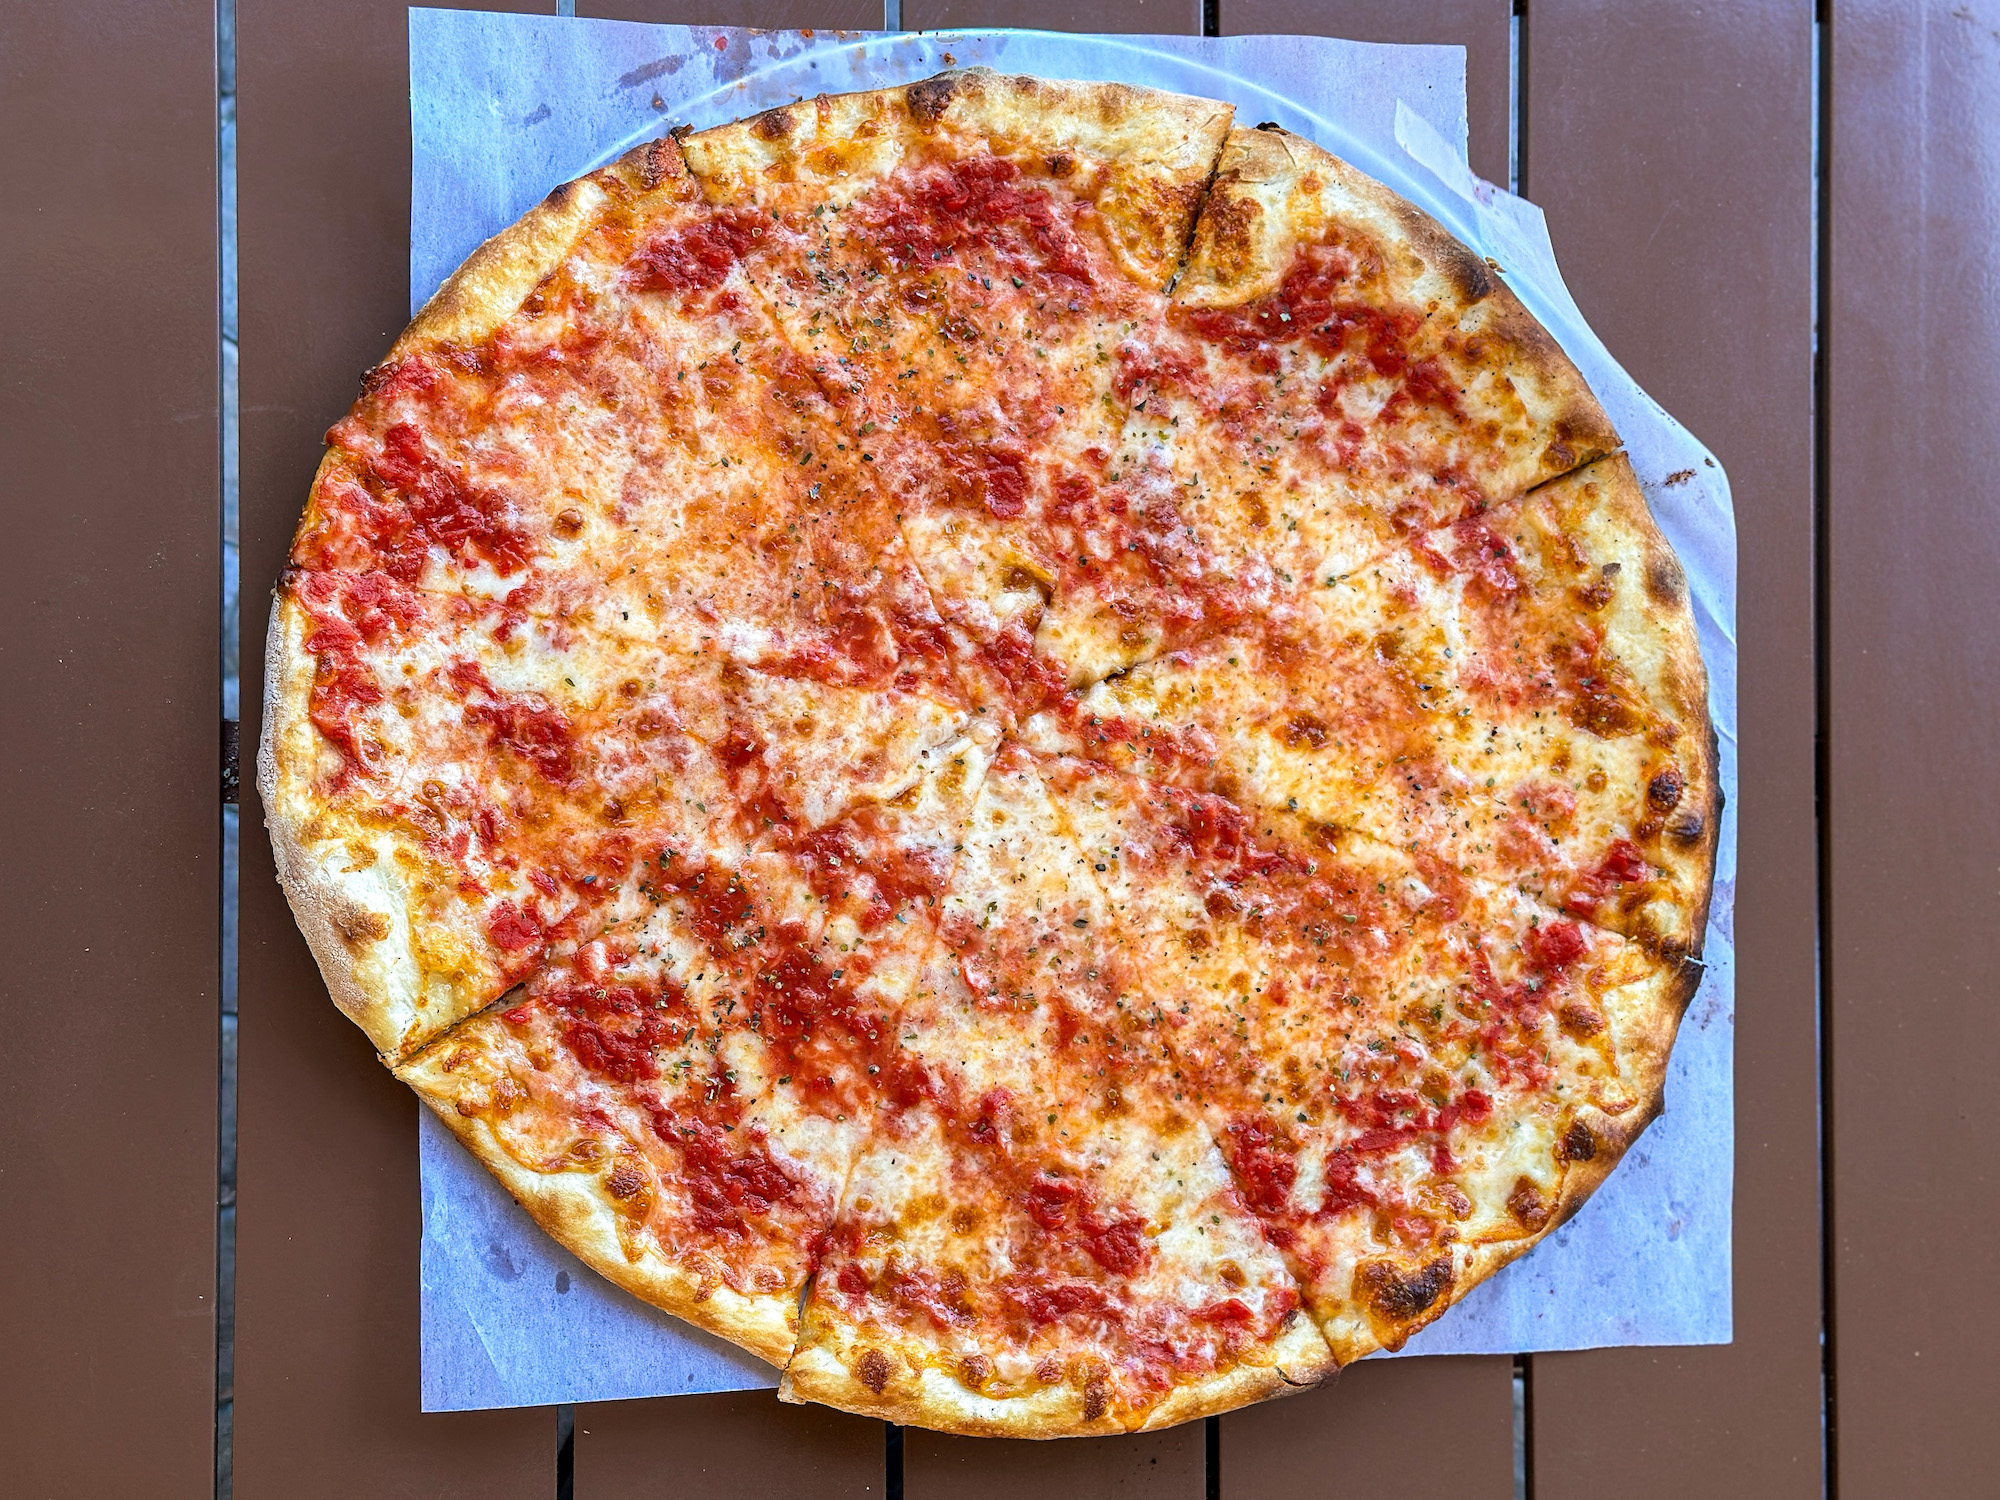 Legendary pizza restaurant Denino's to provide food service to